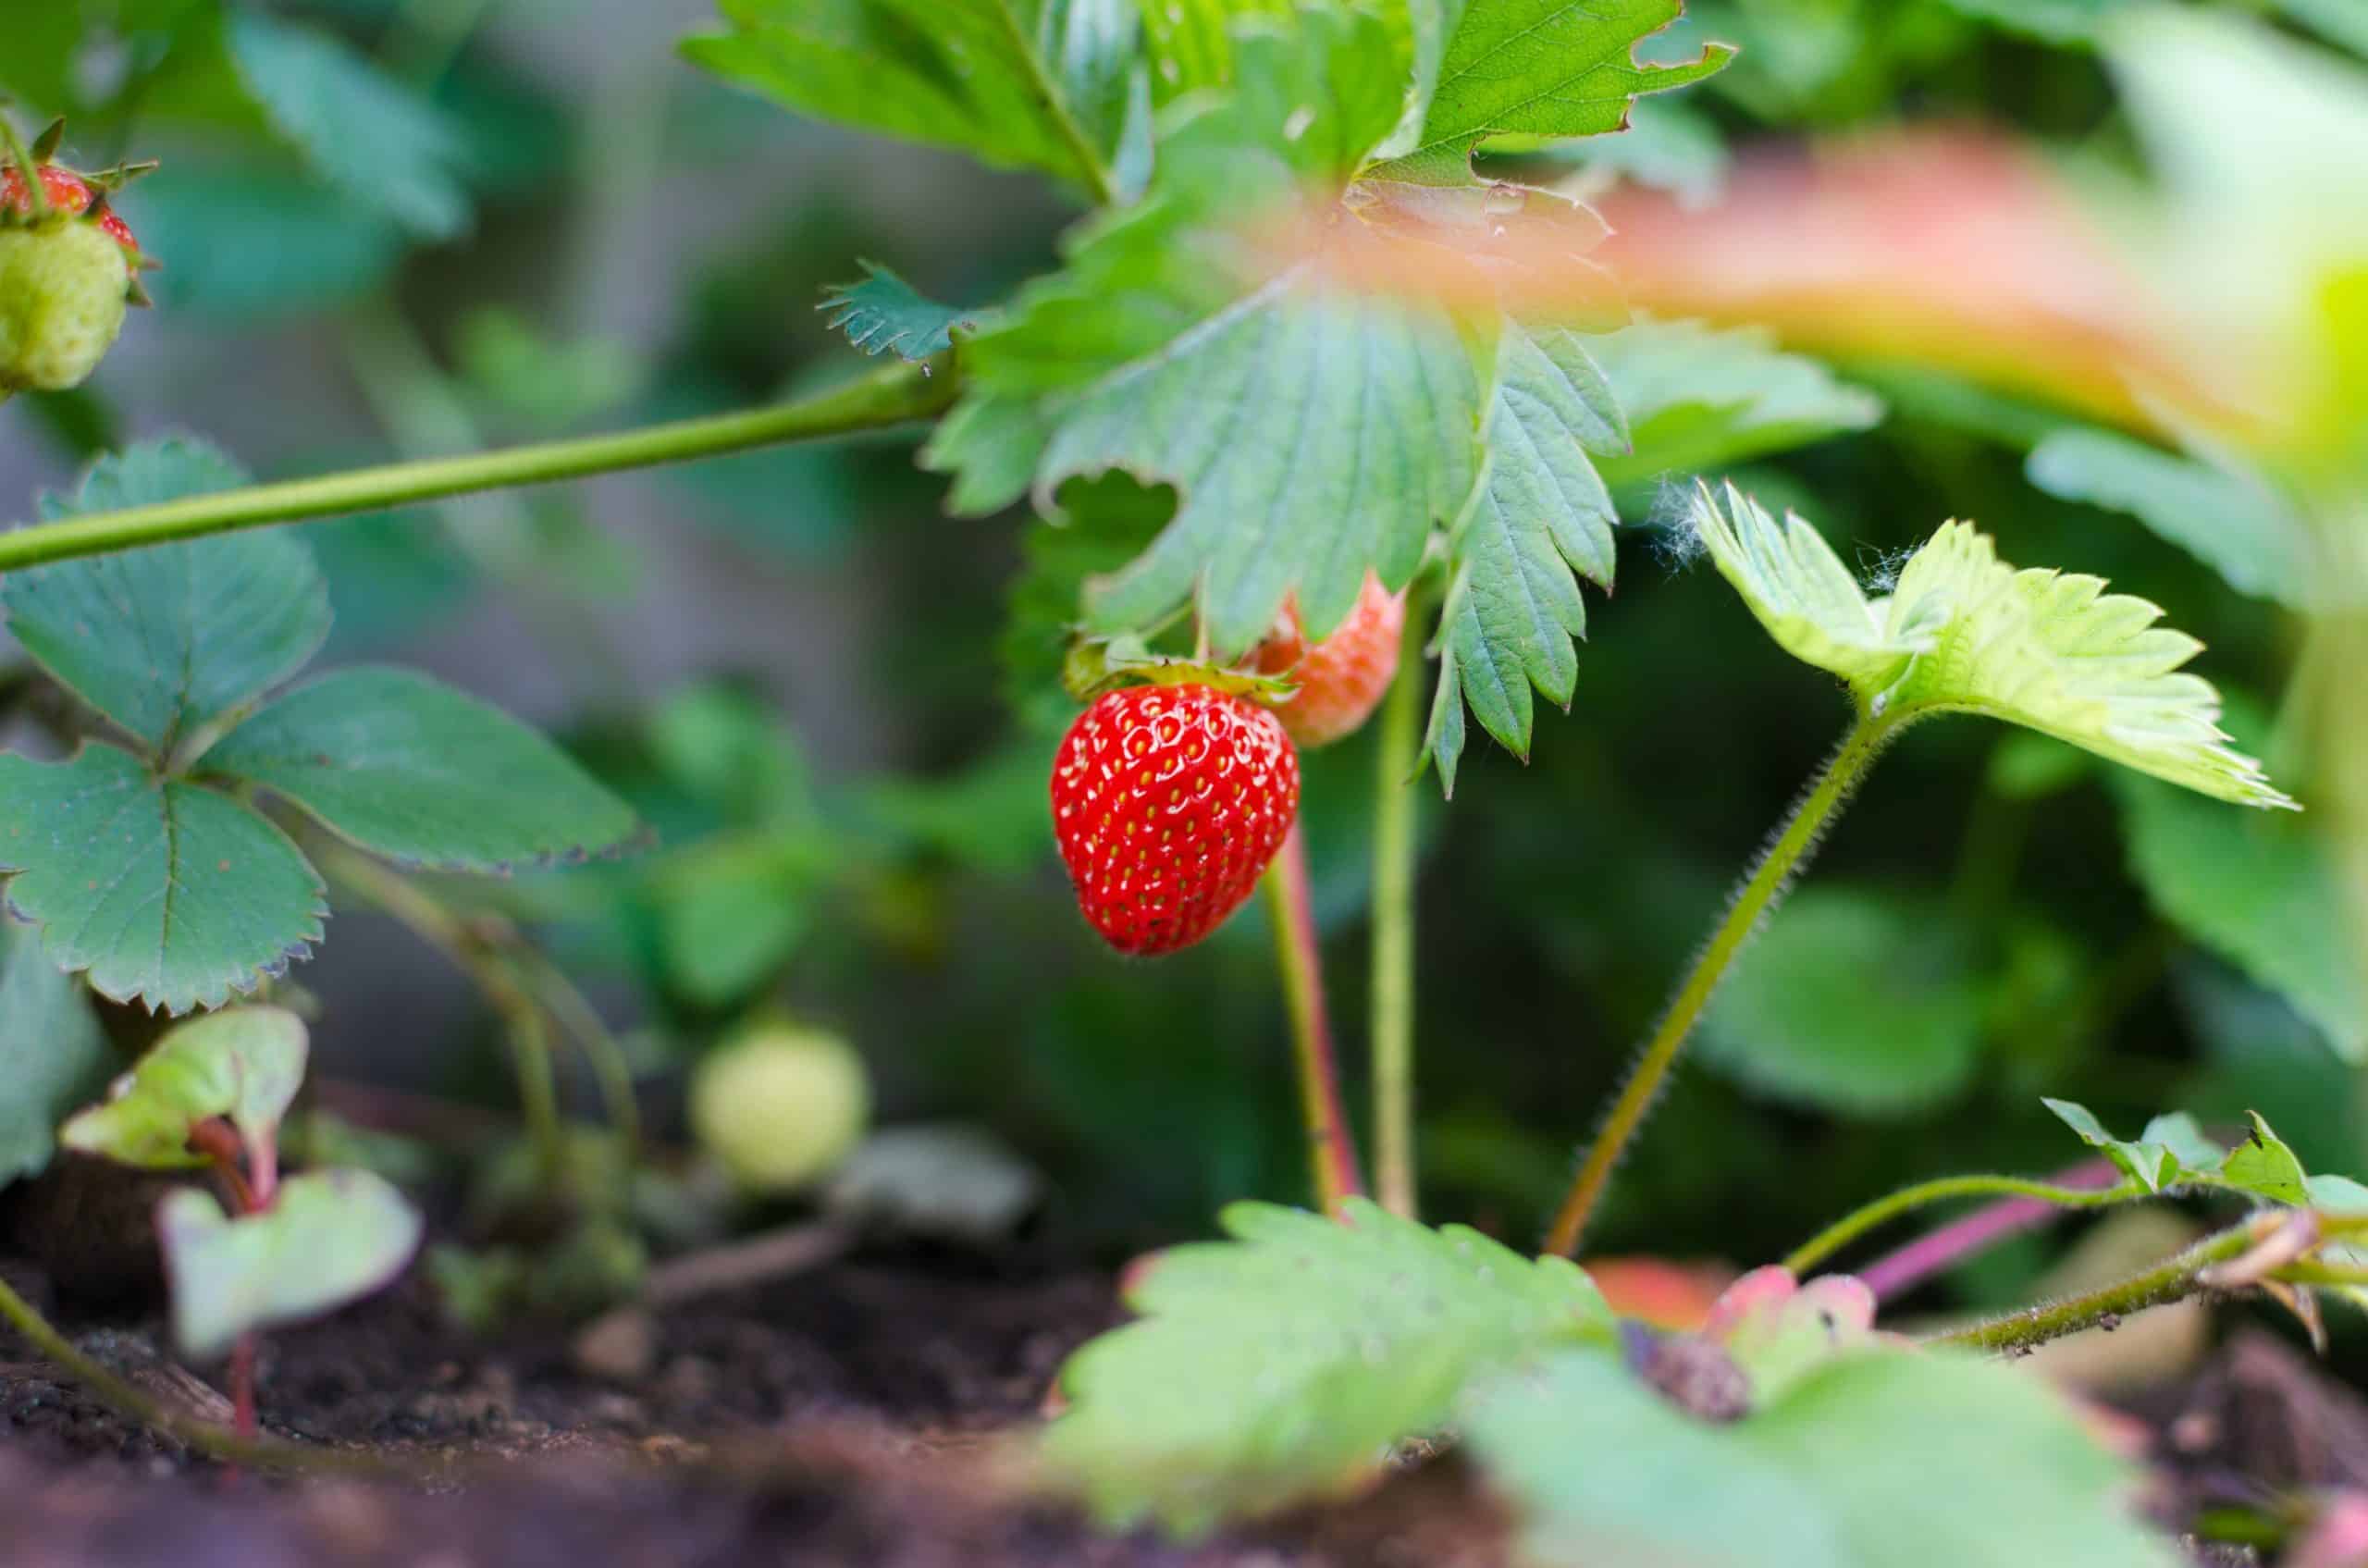 Strawberries growing in a field